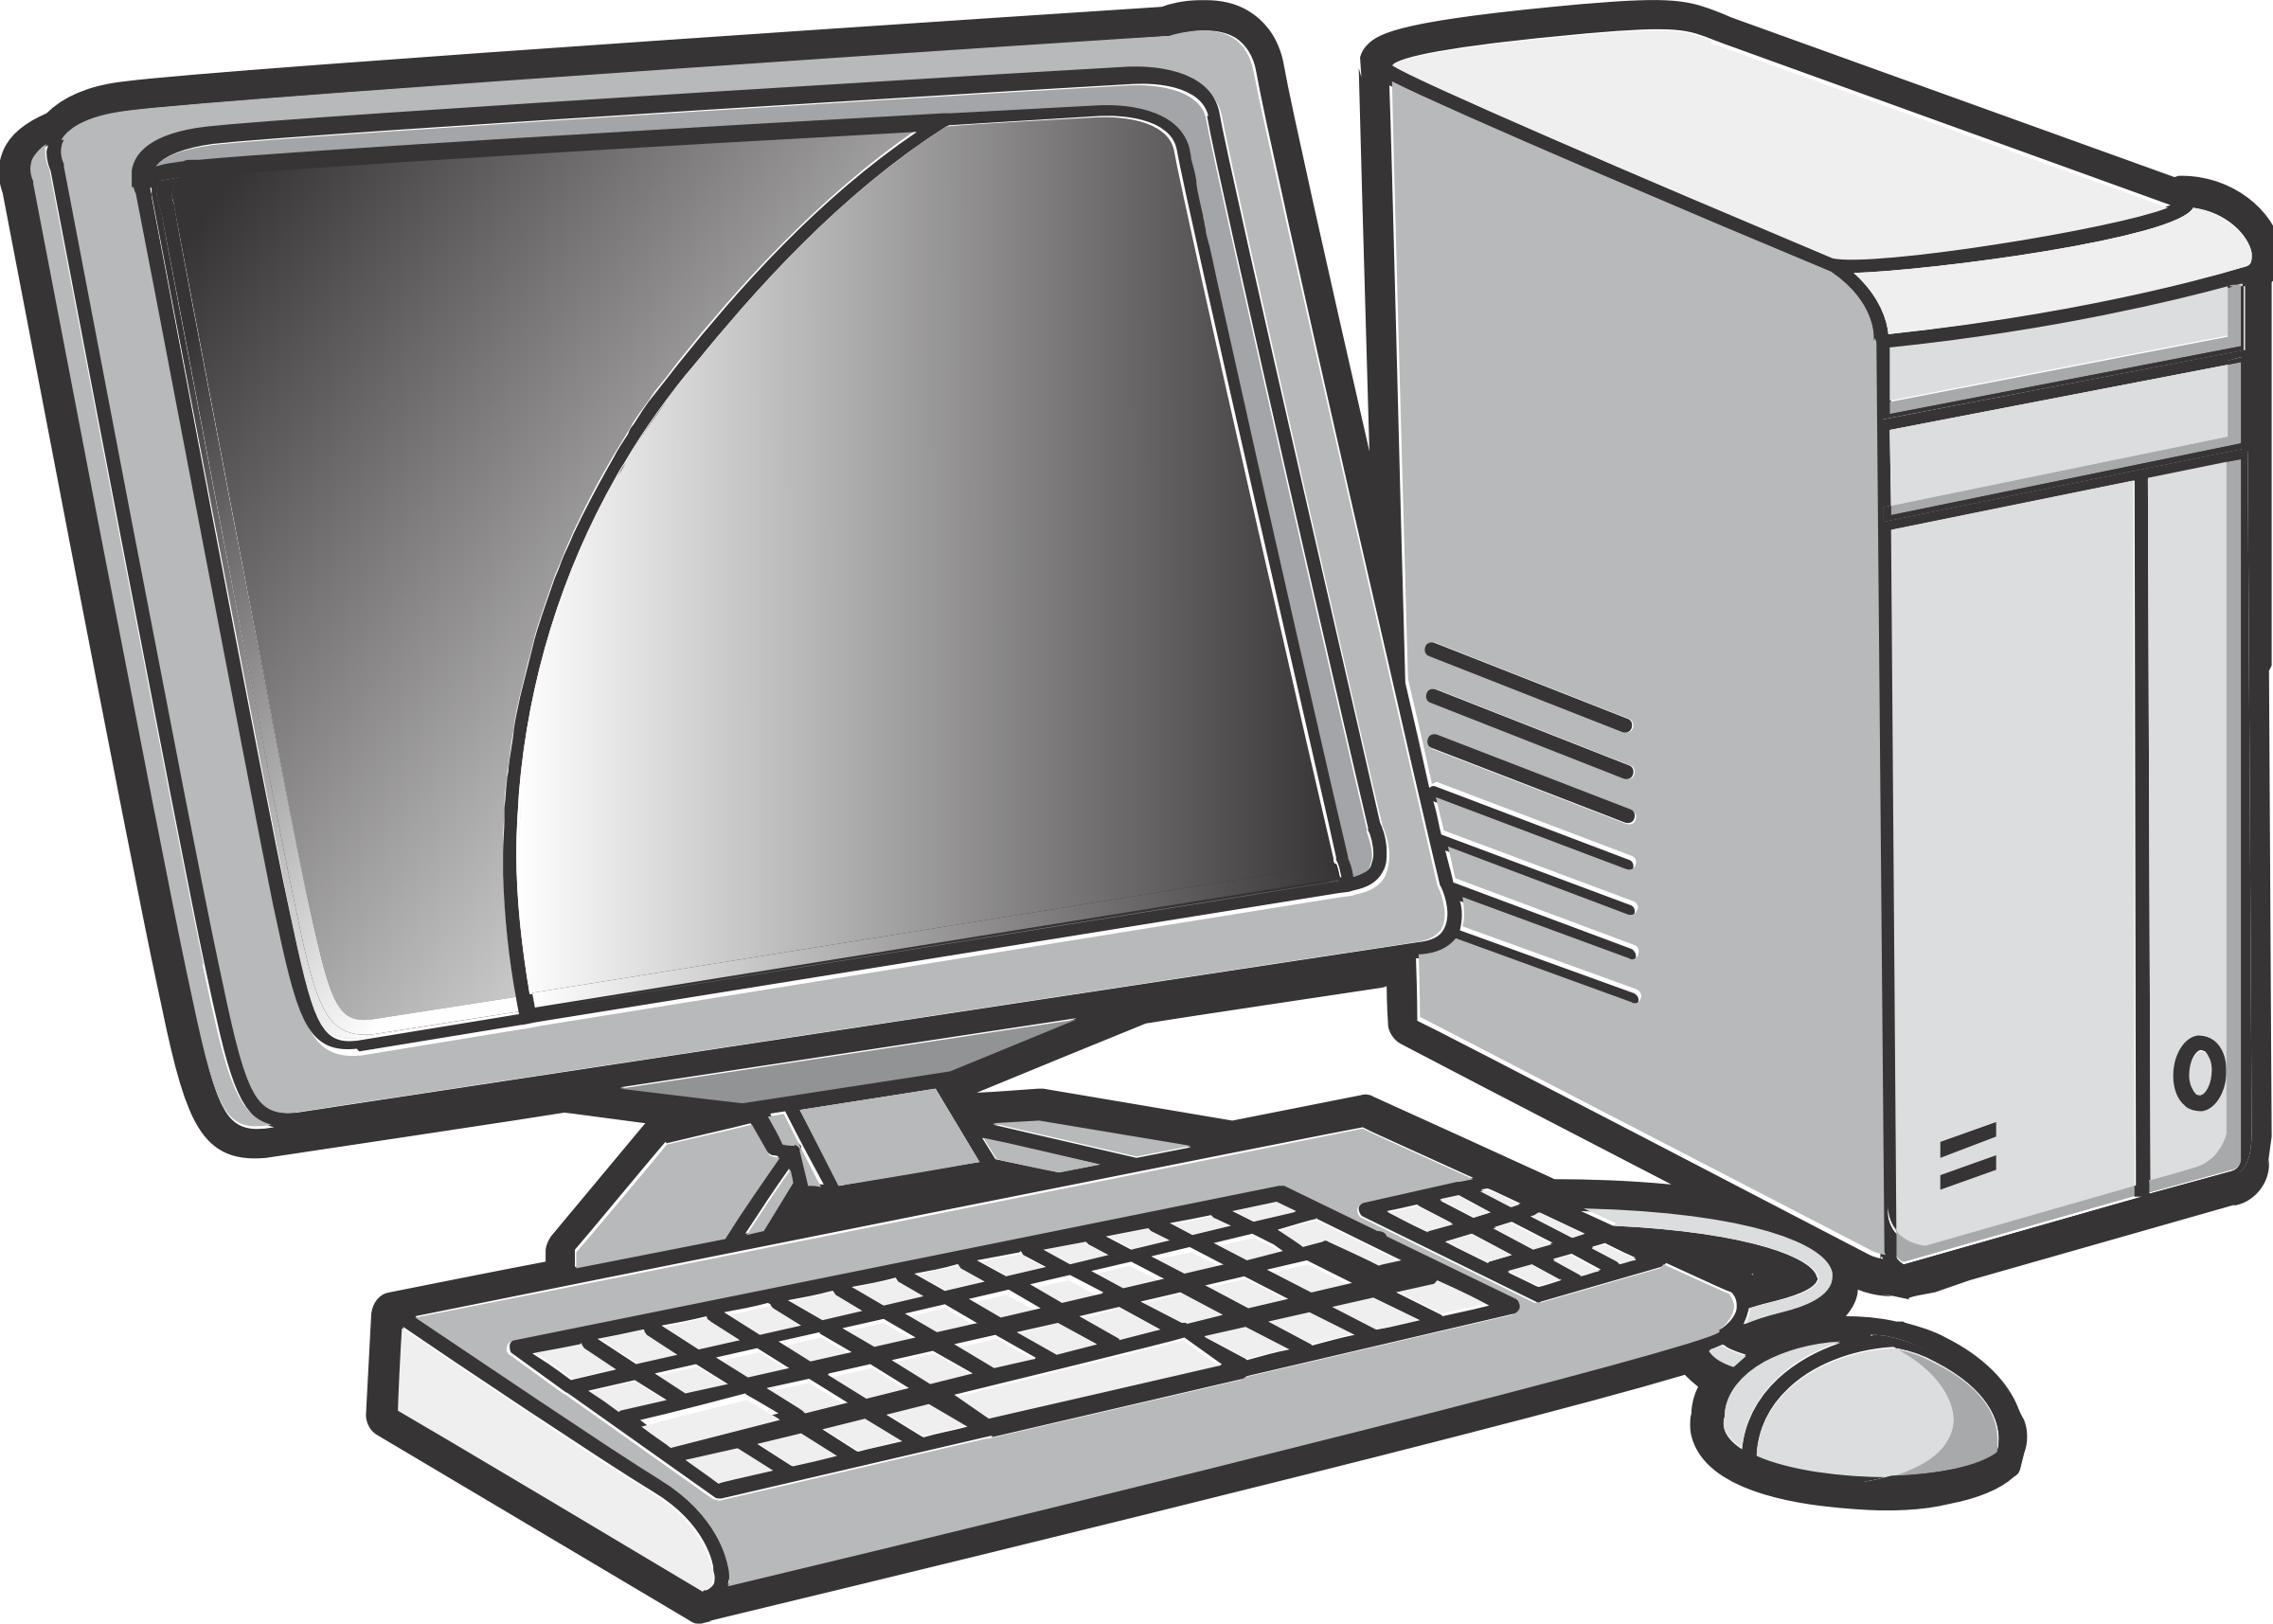 Компьютеризация - Computerization - Компьютер - Компьютерная система - Computer system - Компьютерная техника - Компьютерное оборудование - Computer equipment